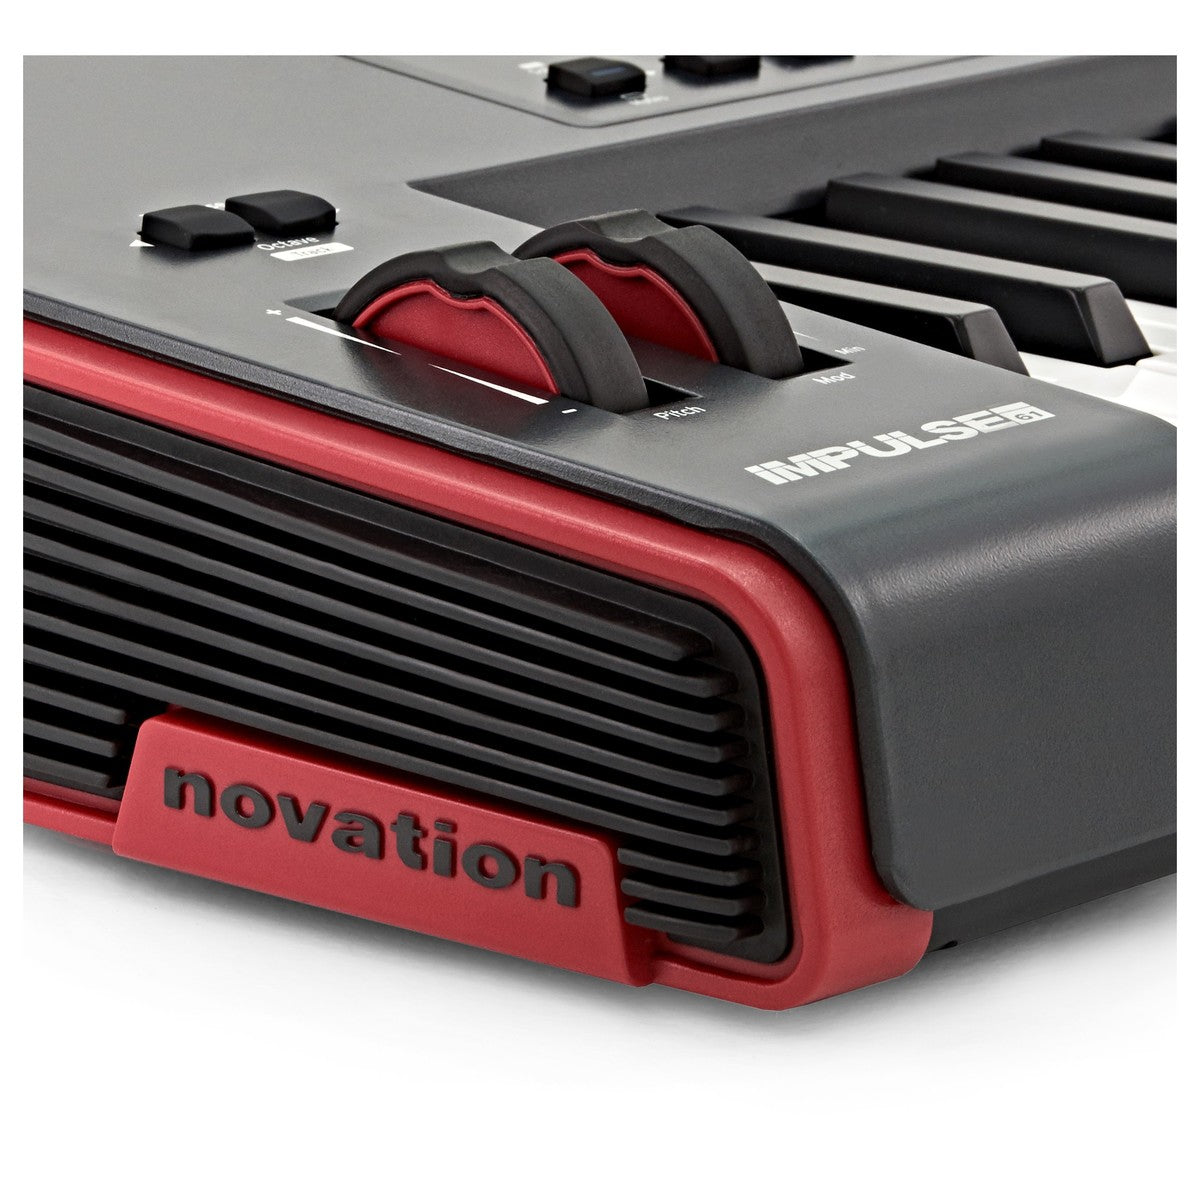 Novation Impulse 61 USB MIDI Controller